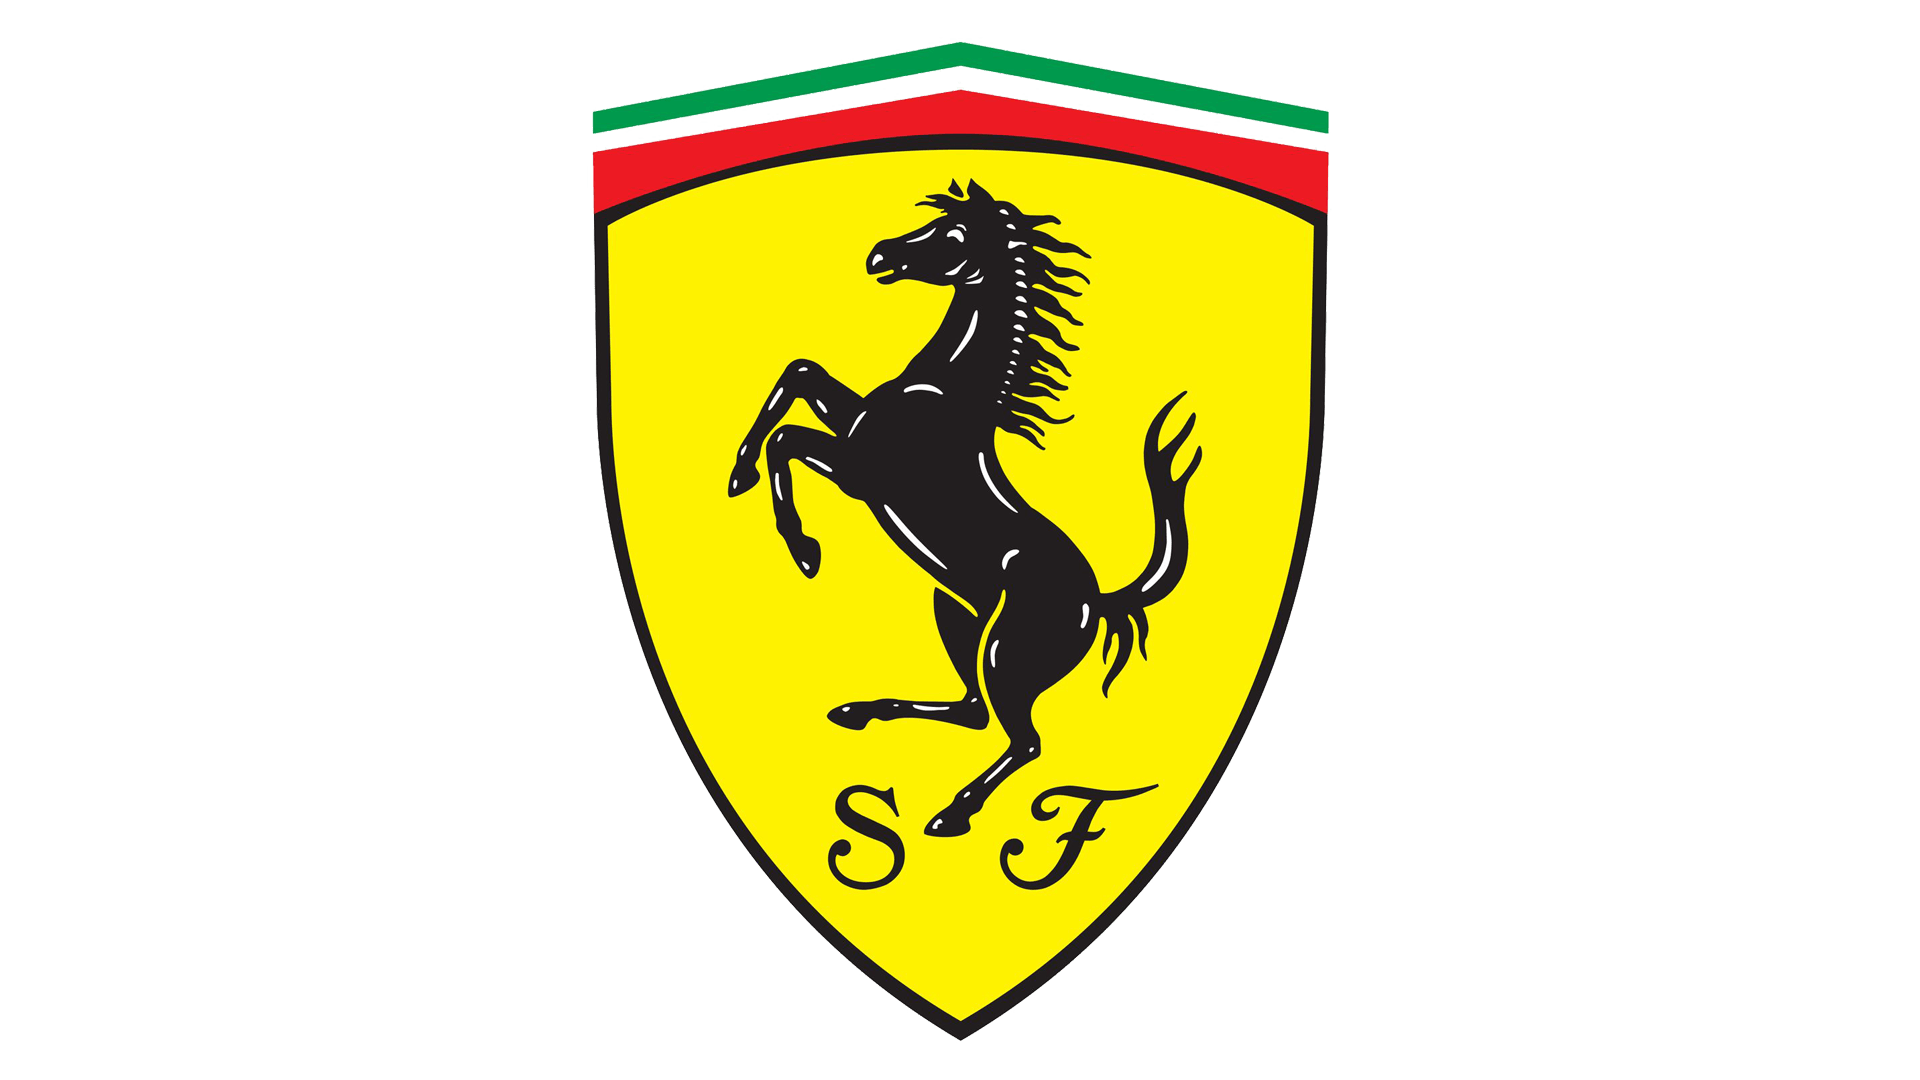 Luxury Sports Car Logo - Italian Car Brands, Companies & Manufacturer Logos with Names